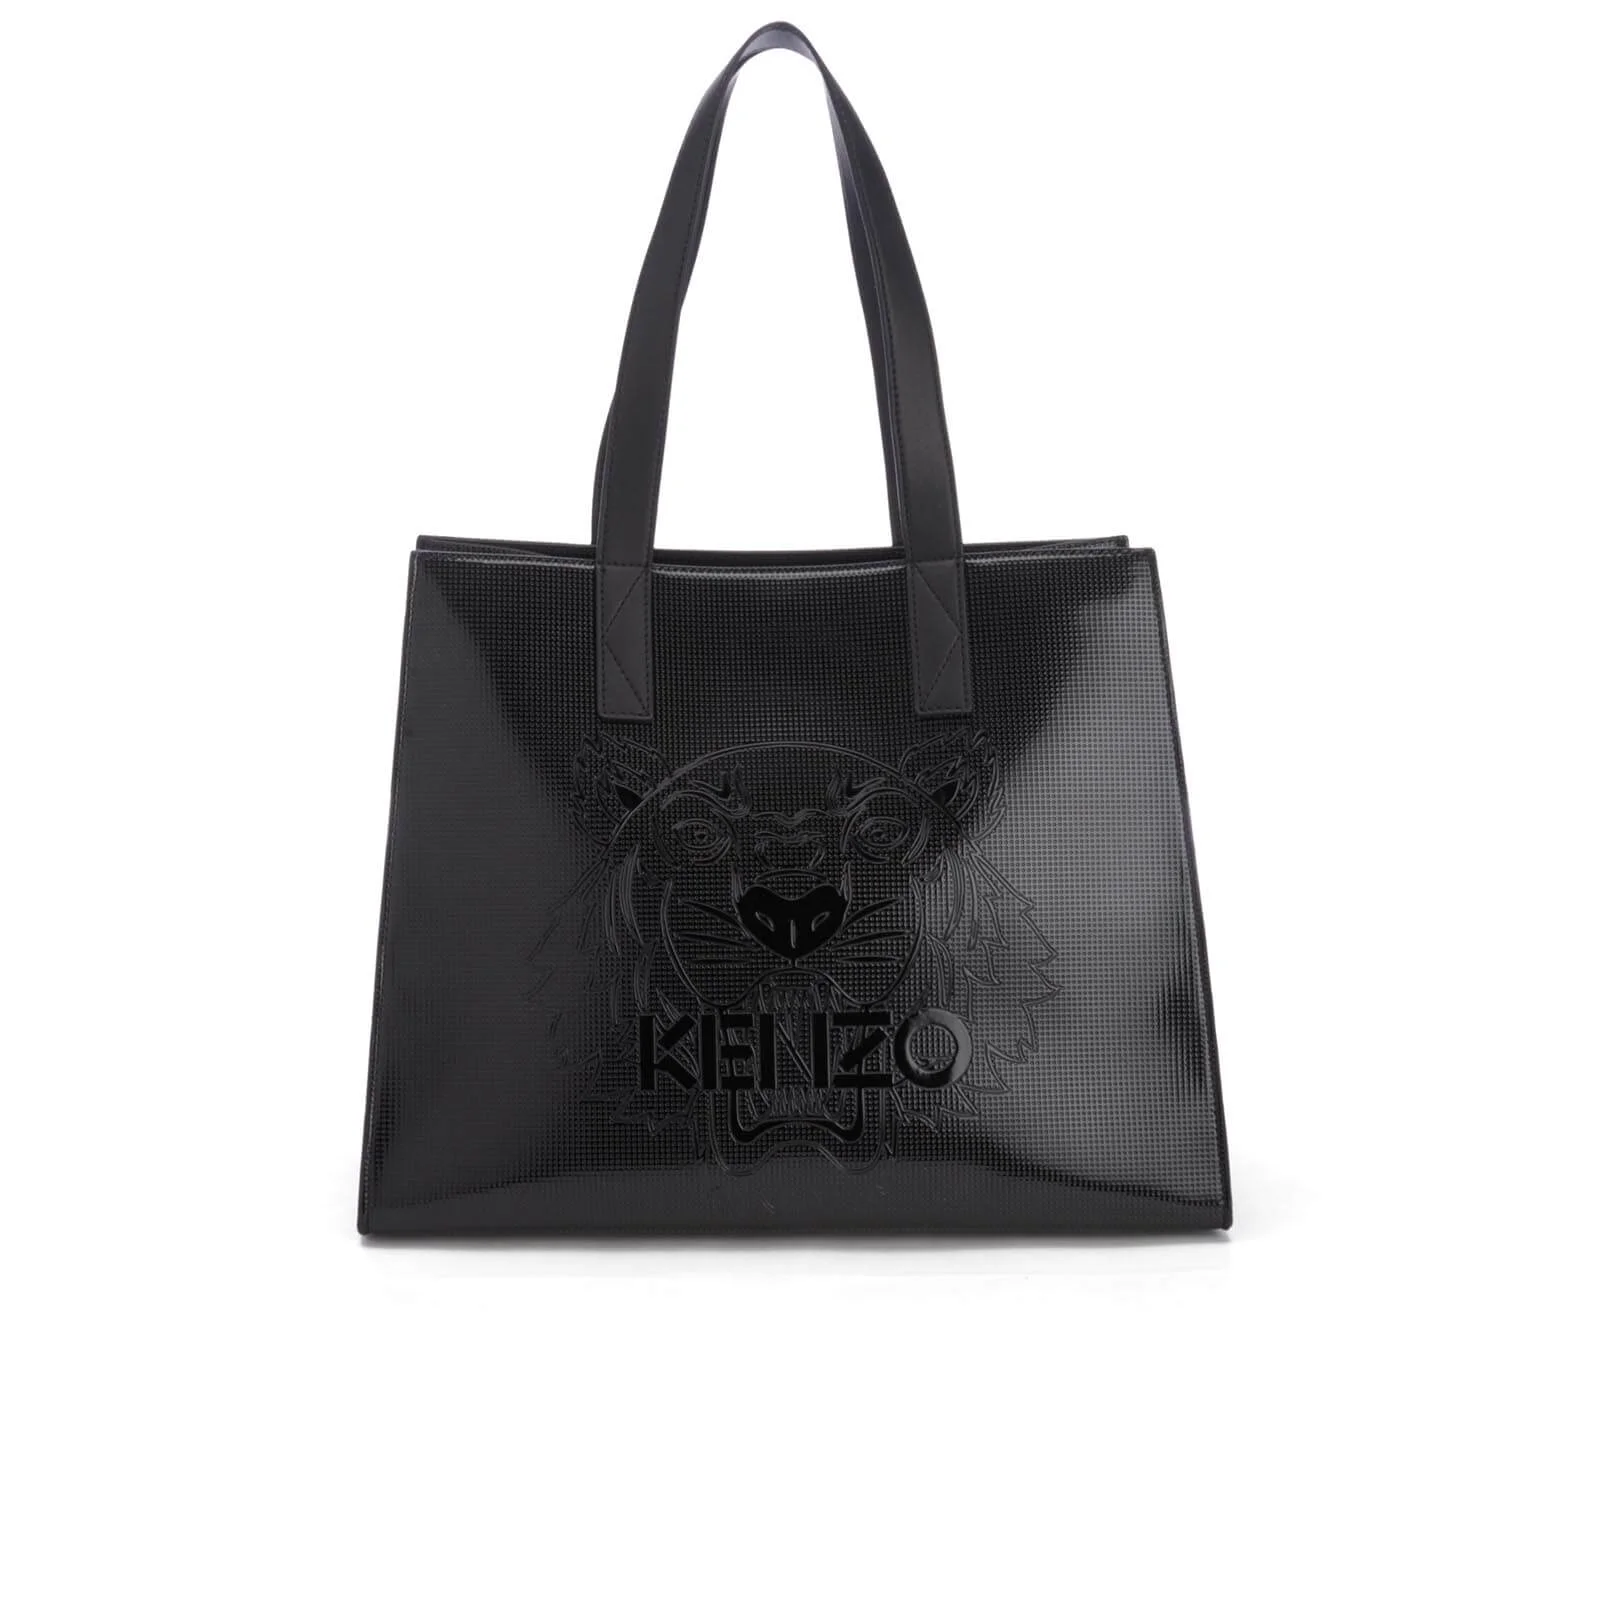 KENZO Women's Icons Horizontal Tote Bag - Black Image 1